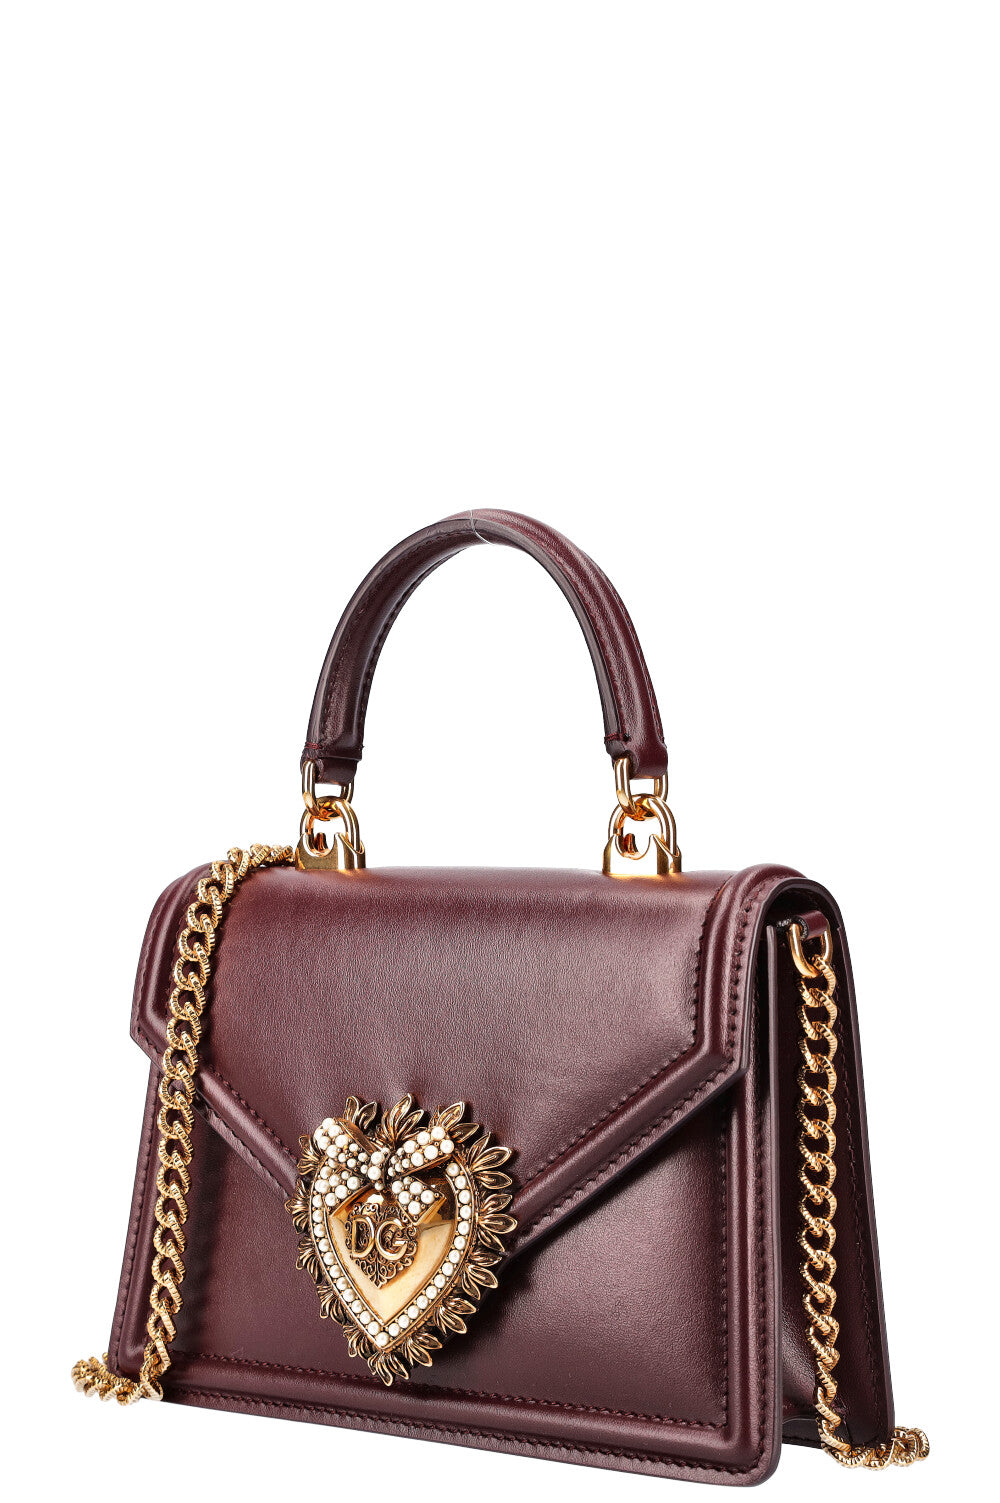 Dolce & Gabbana Grab Bag Handbag/short shoulder bag. Dark Tan Grain  Leather VGC